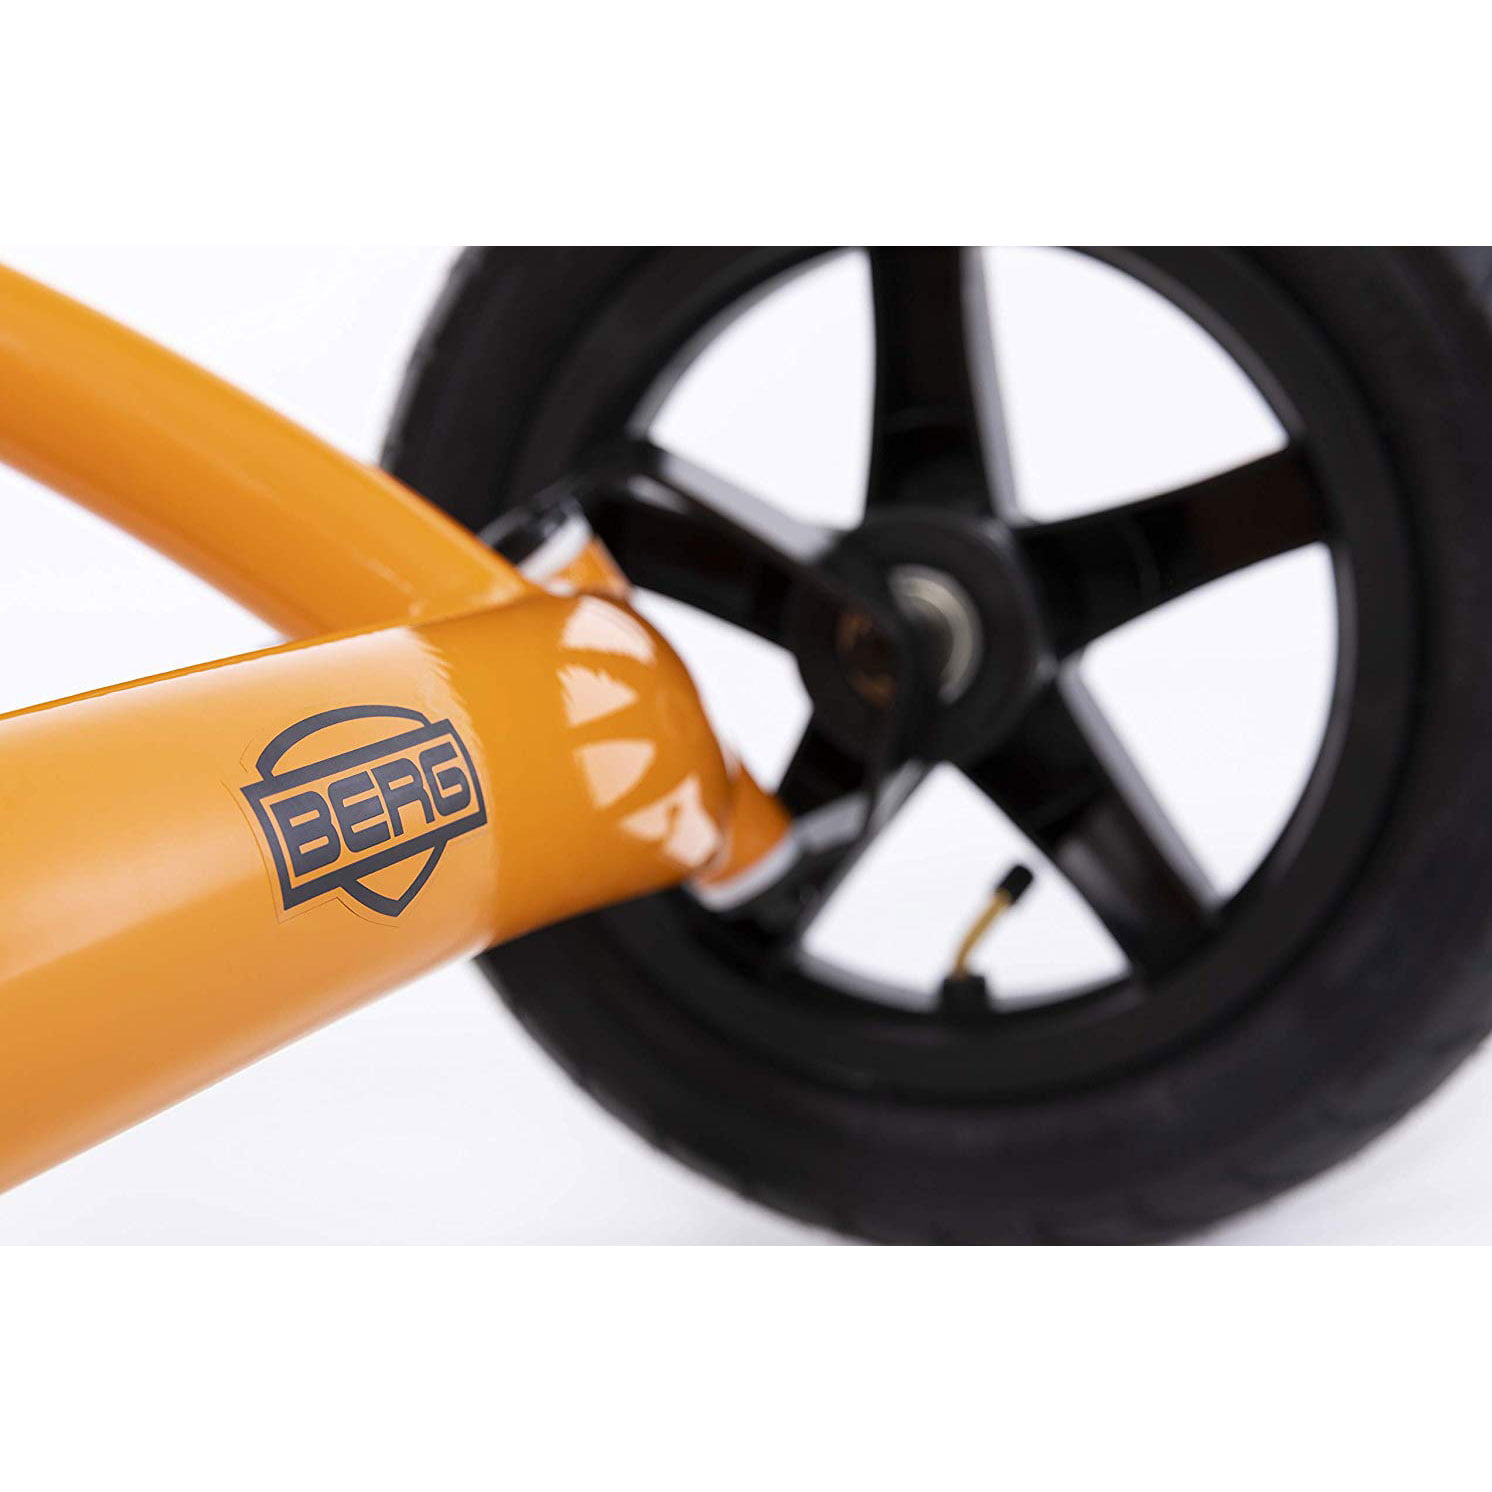  Berg Toys - Buddy B-Orange Pedal Go Kart - Go Kart - Go Cart  for Kids - Pedal Car Outdoor Toys for Children Ages 3-8 - Ride On-Toy - BFR  System 